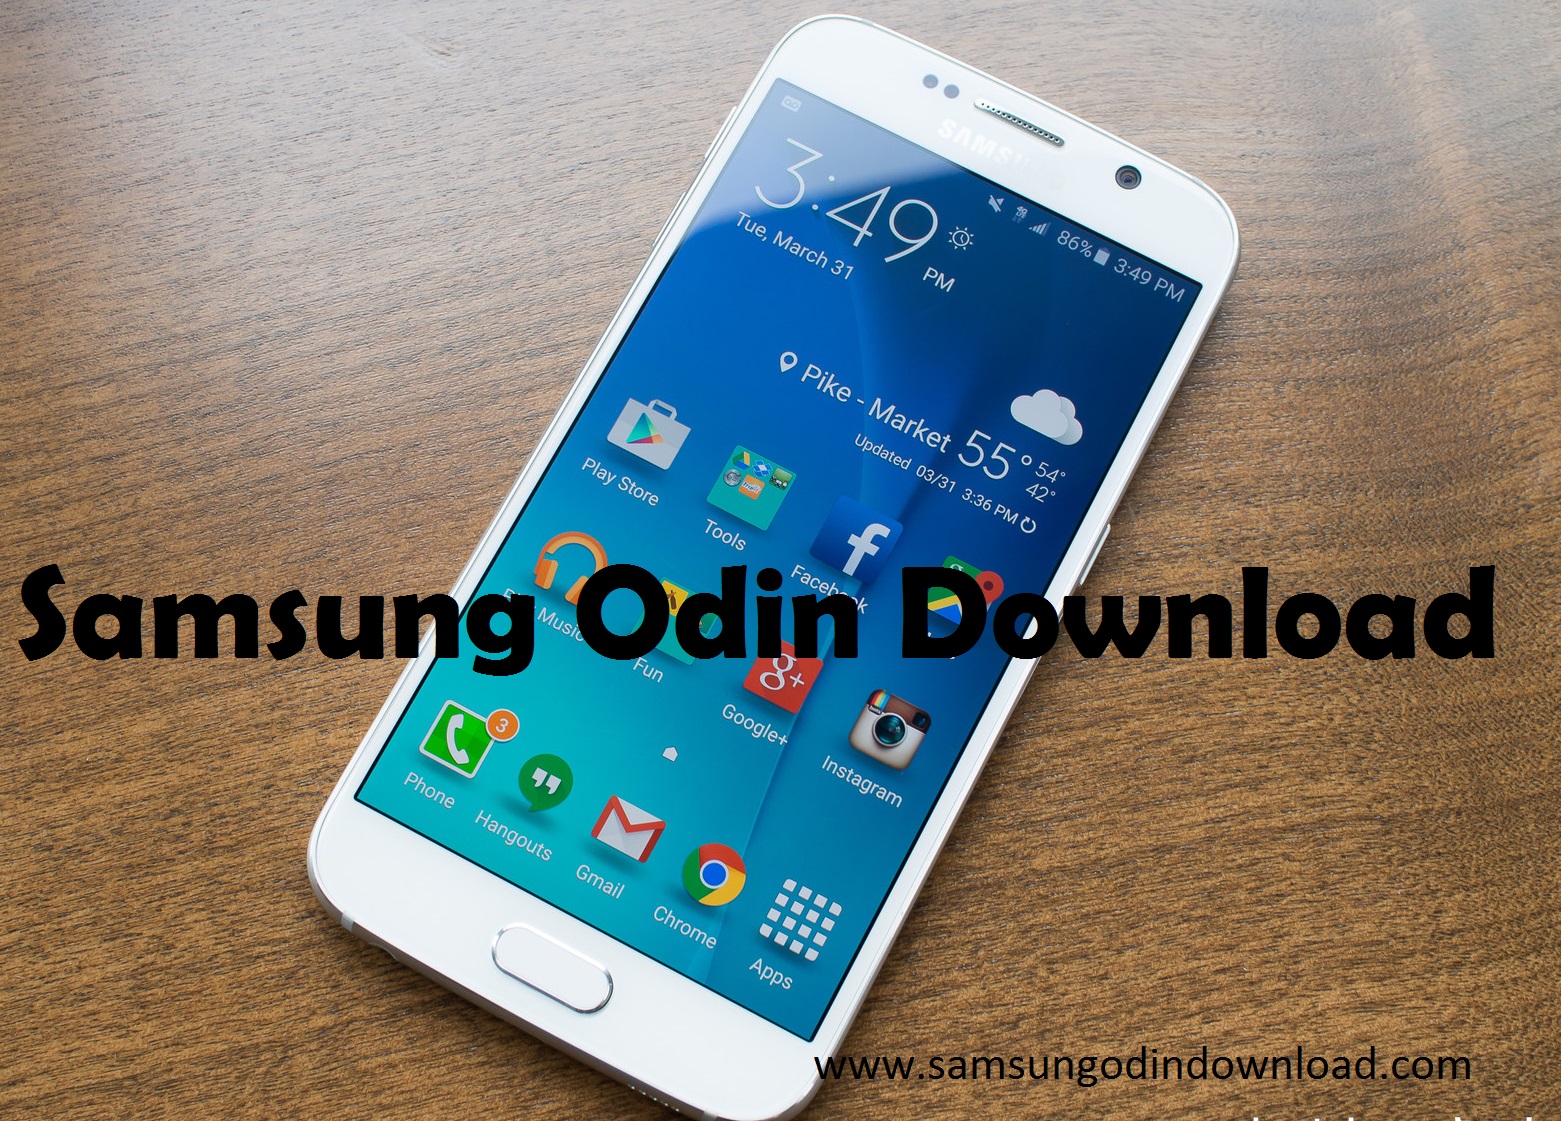 Samsung Odin Odin Download  How to Fix hiddenimgext4 Error